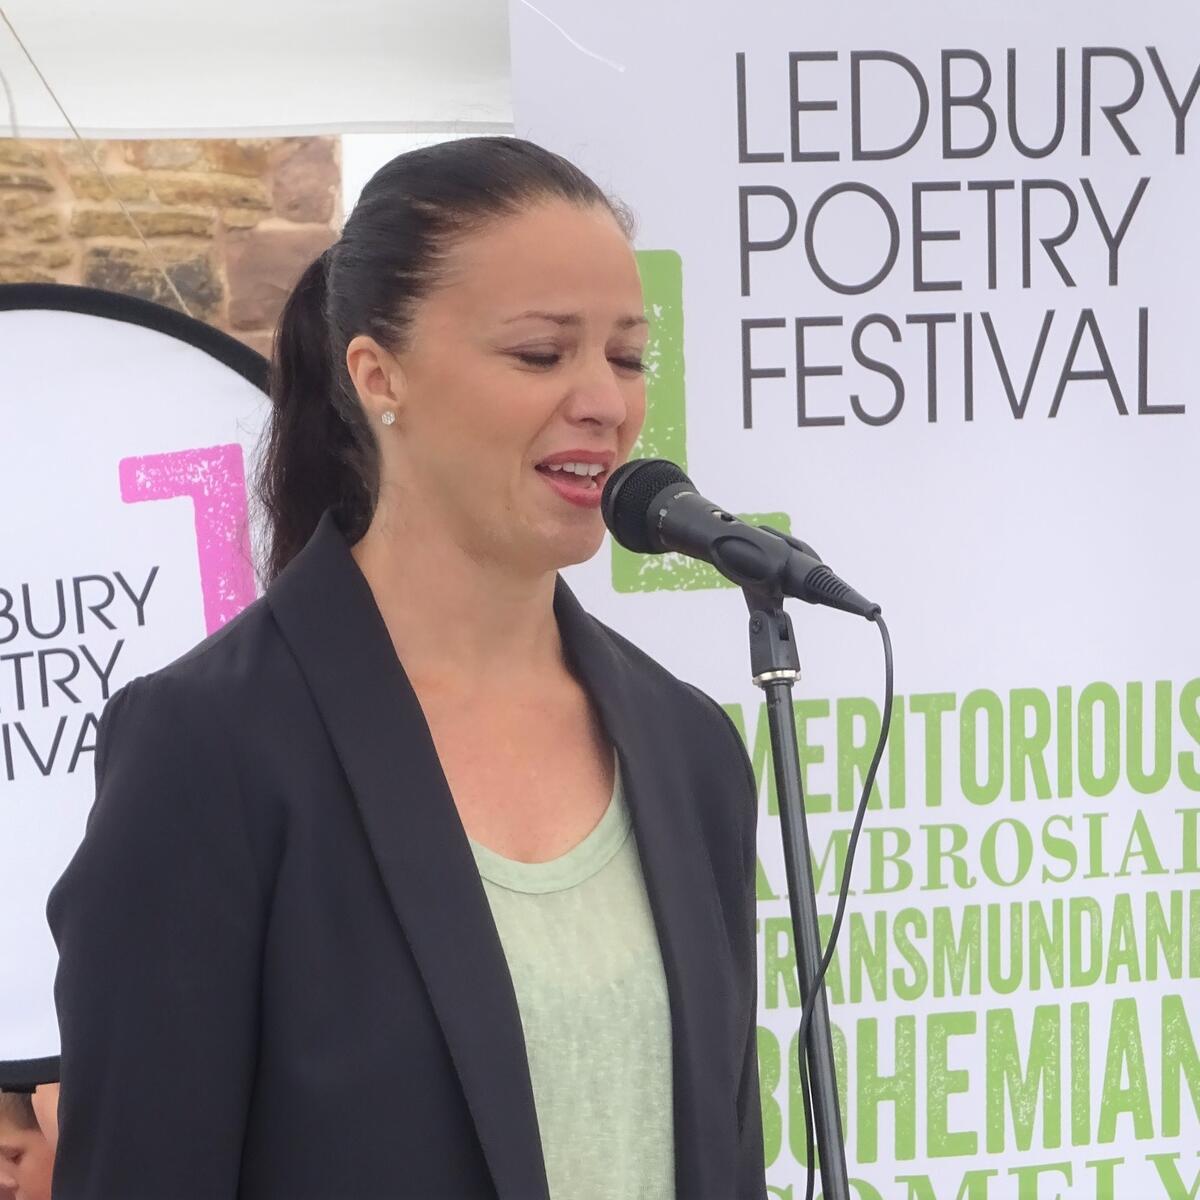 Lady presenting poetry